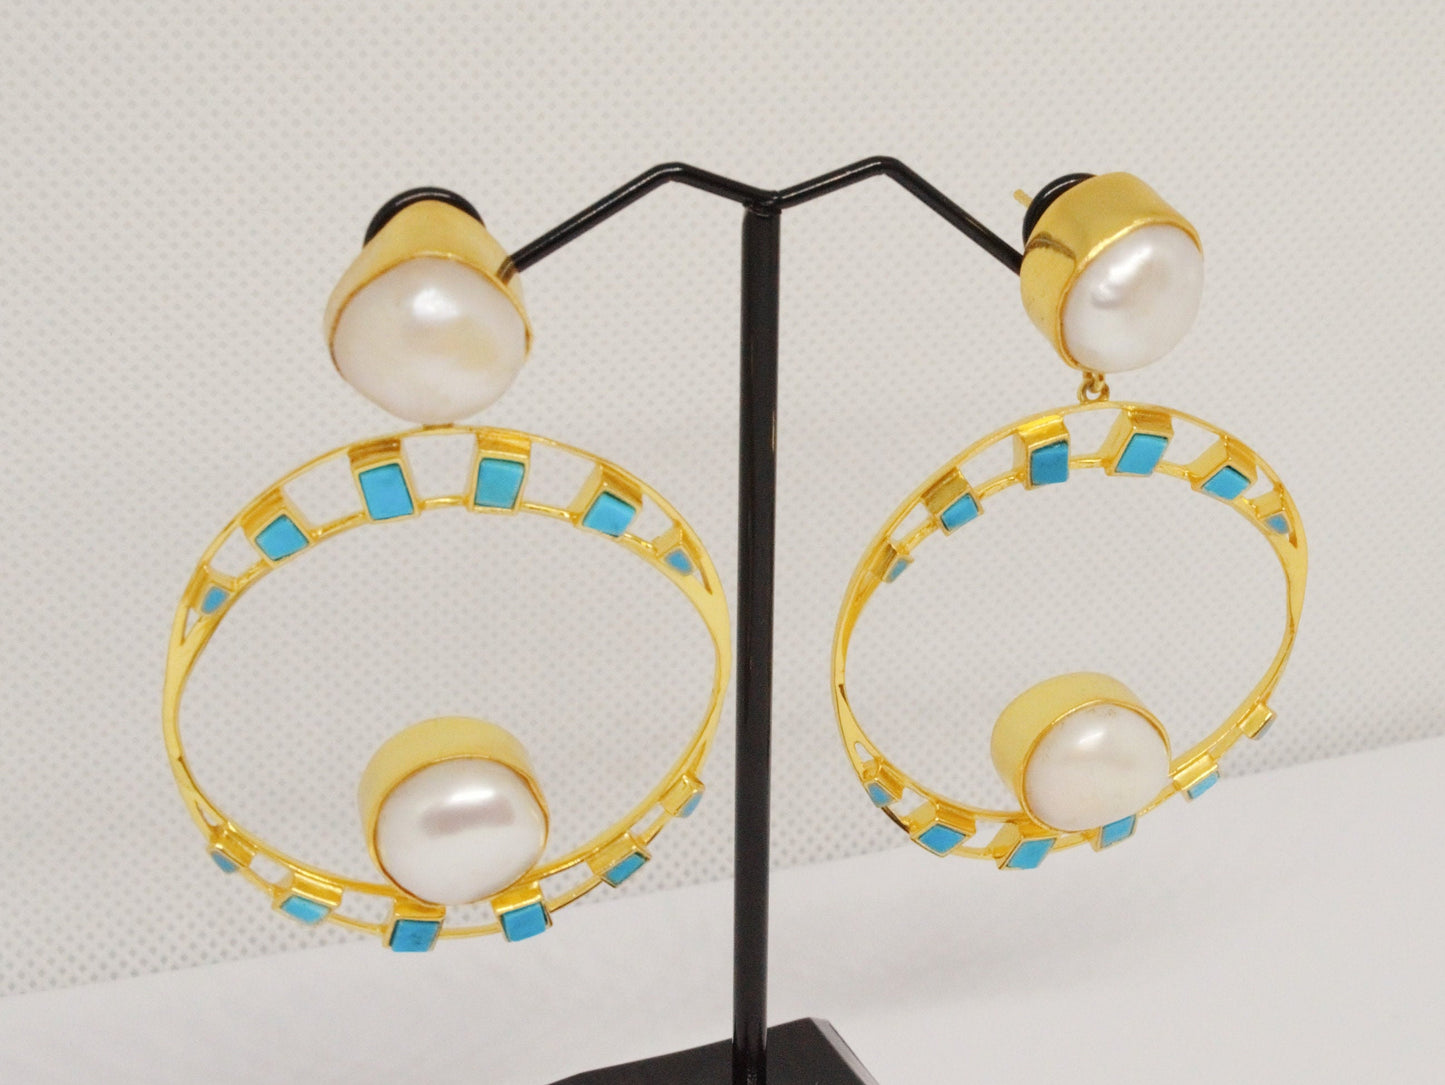 Pearl, Turquoise Earrings, June, December Birthstone, Gemstone Dangle Earrings, Jhumka Earrings, Gold Plated Sterling Silver Earrings